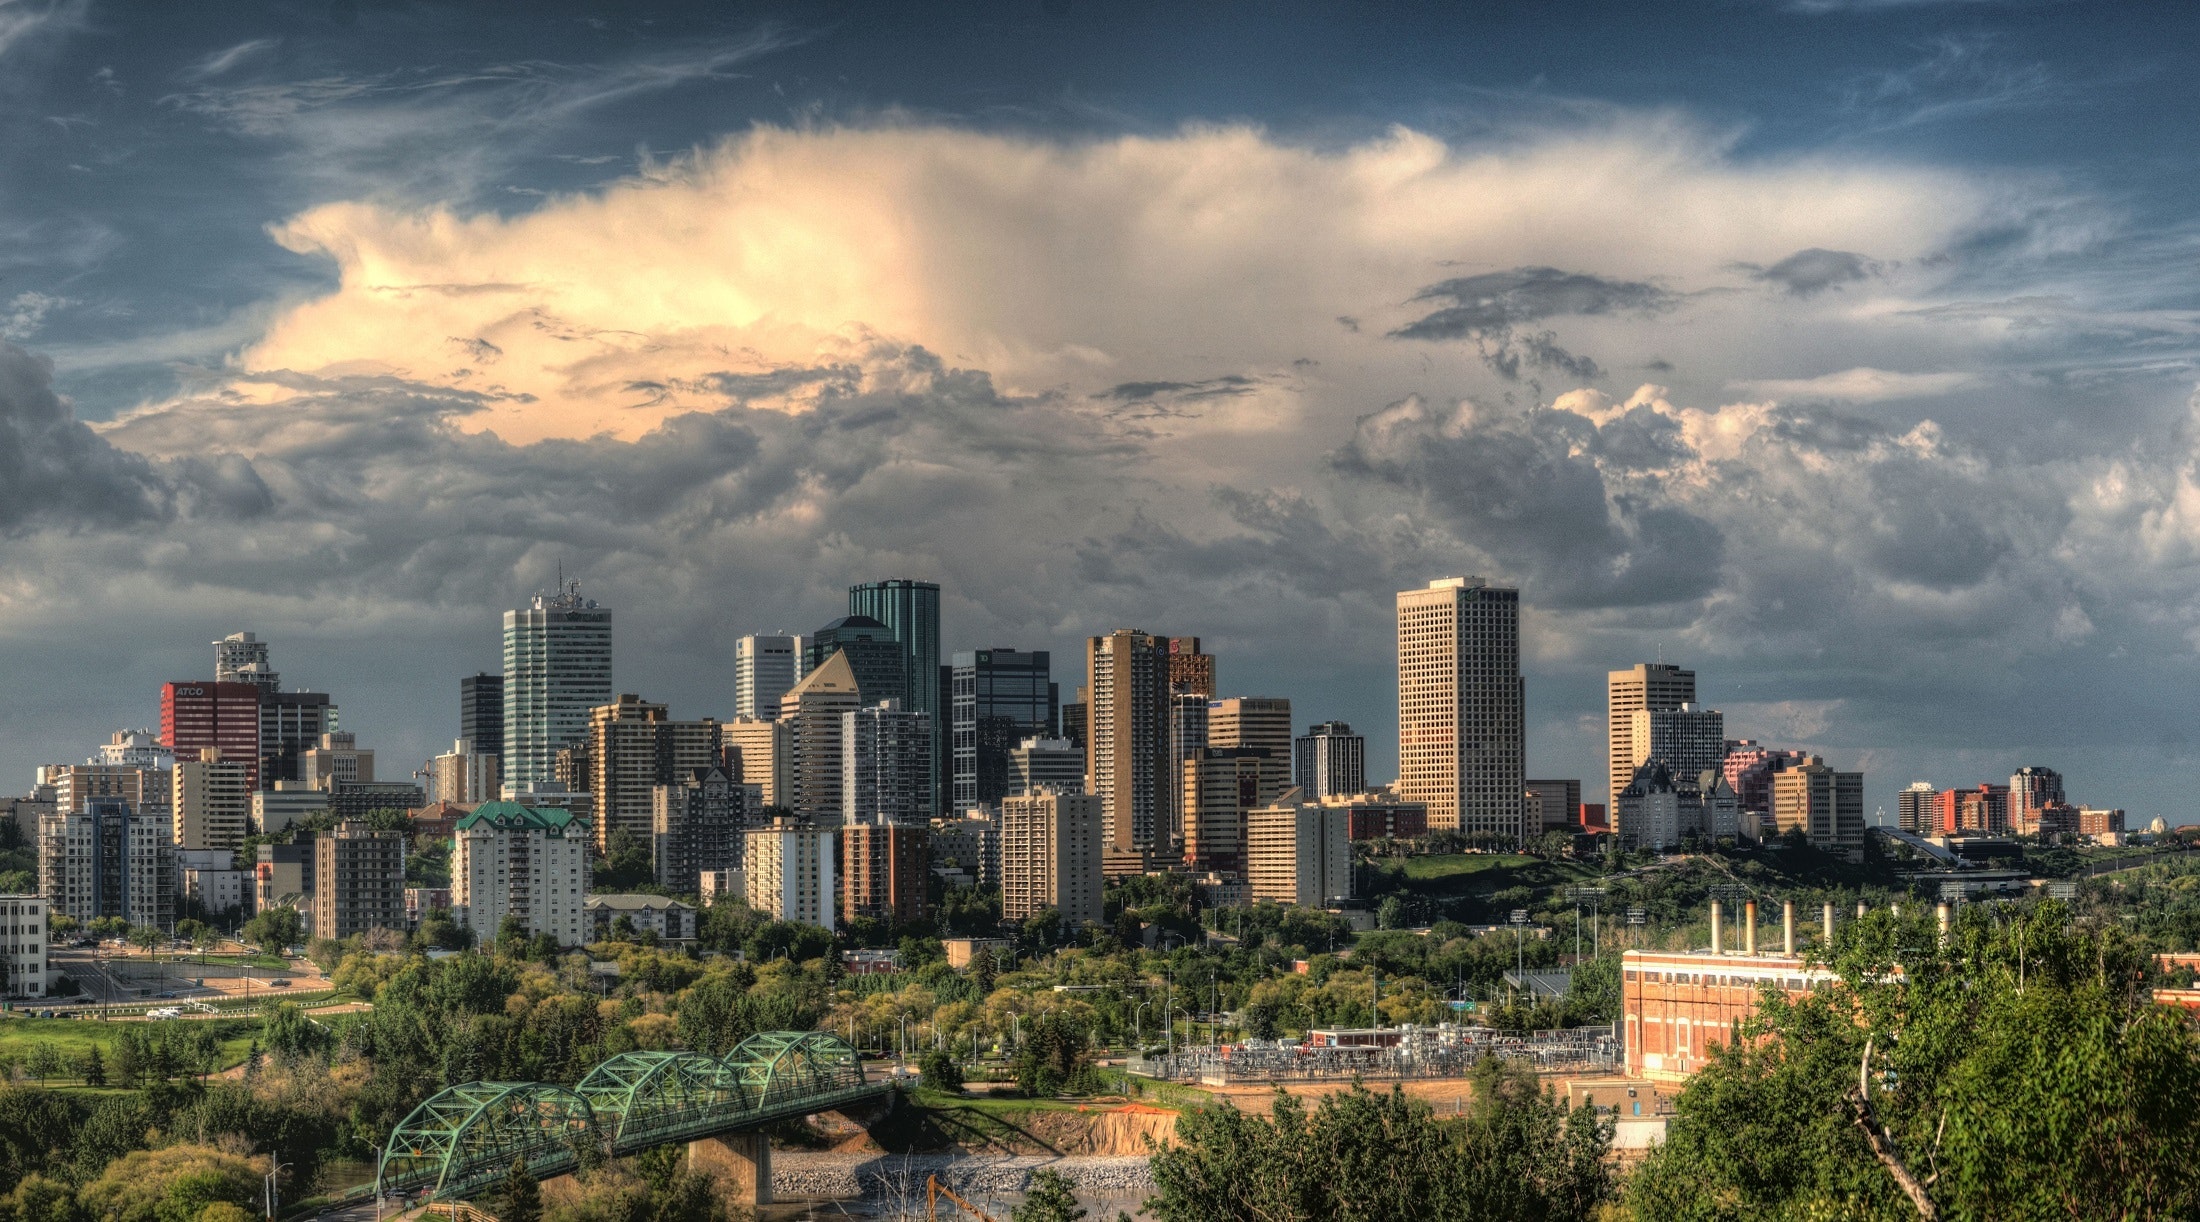 The Edmonton downtown skyline from across the North Saskatchewan River